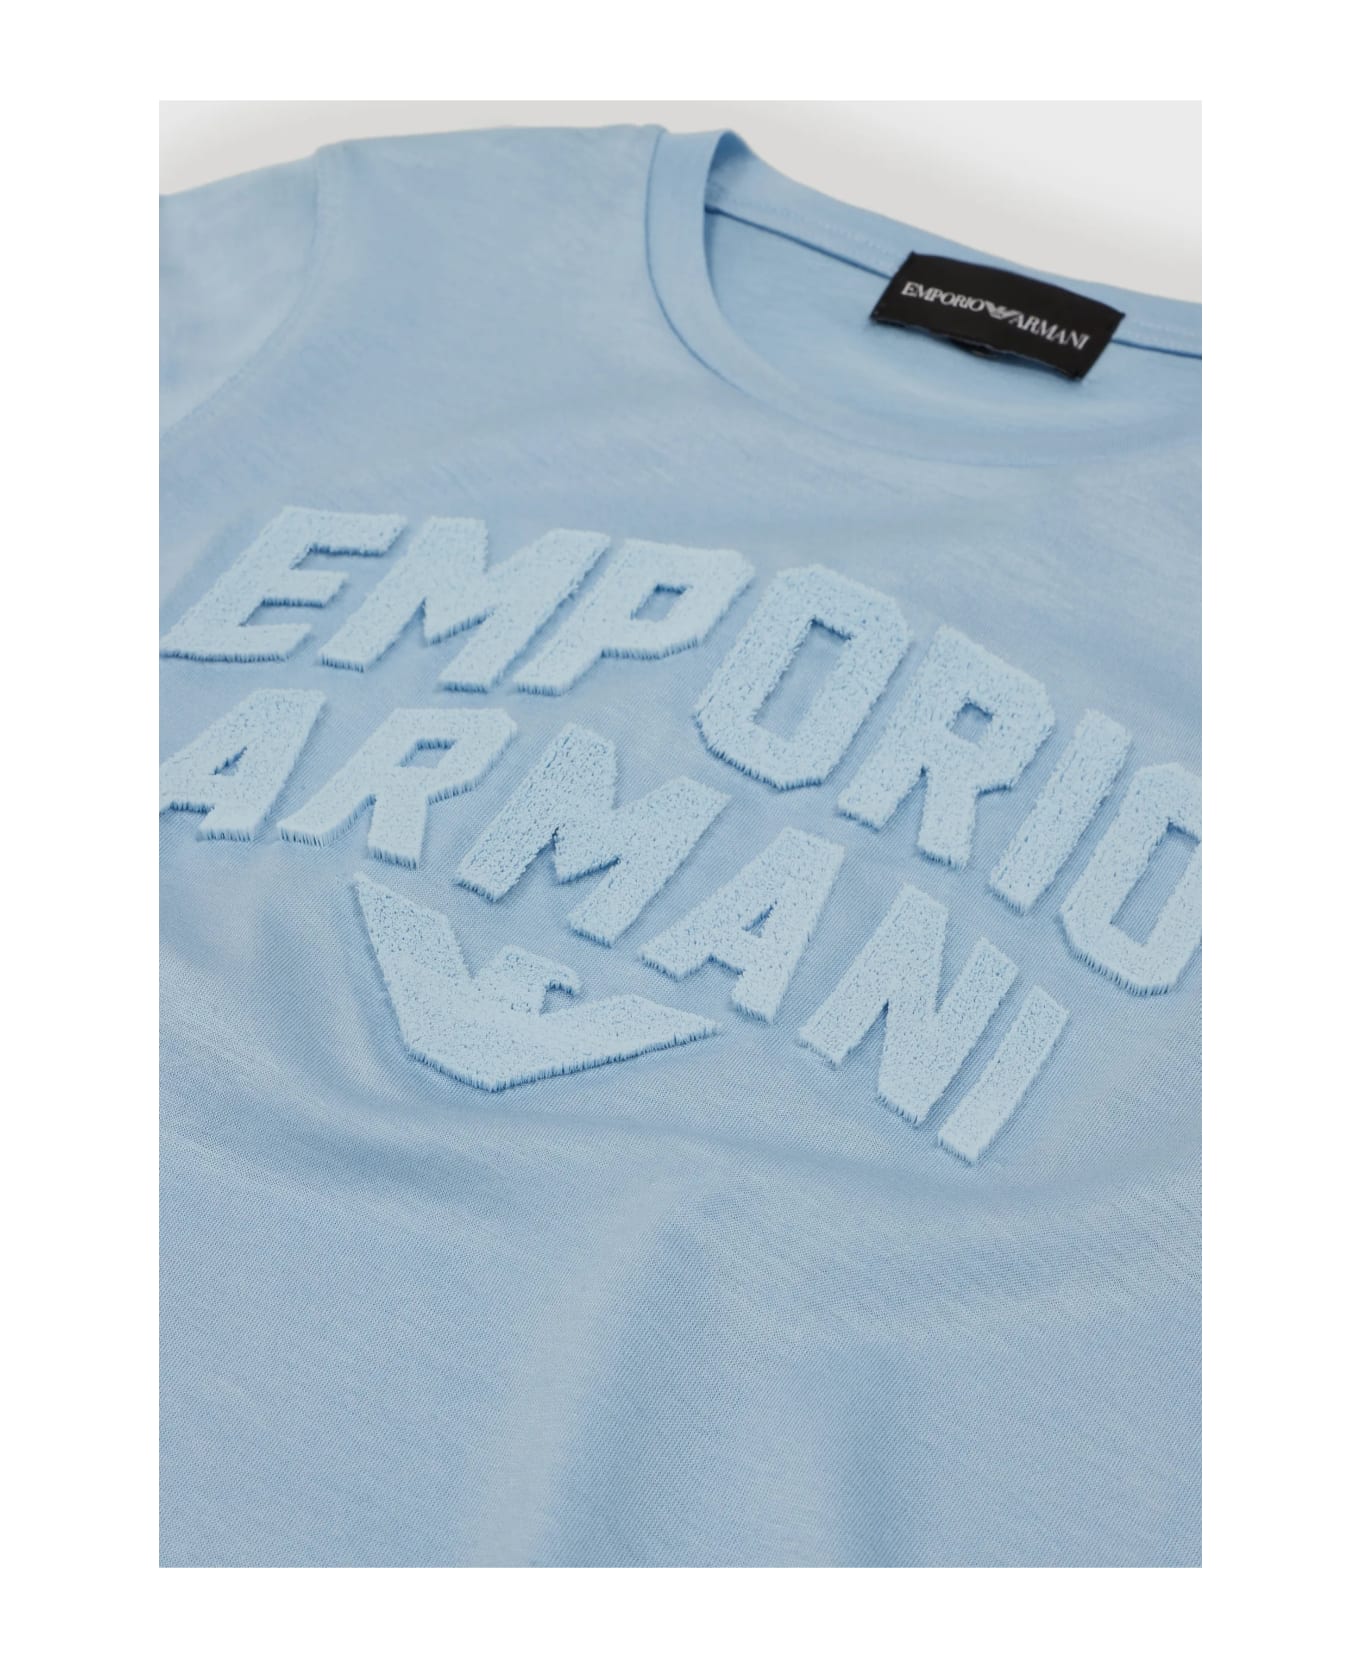 Emporio Armani T-shirt With Application - Light blue